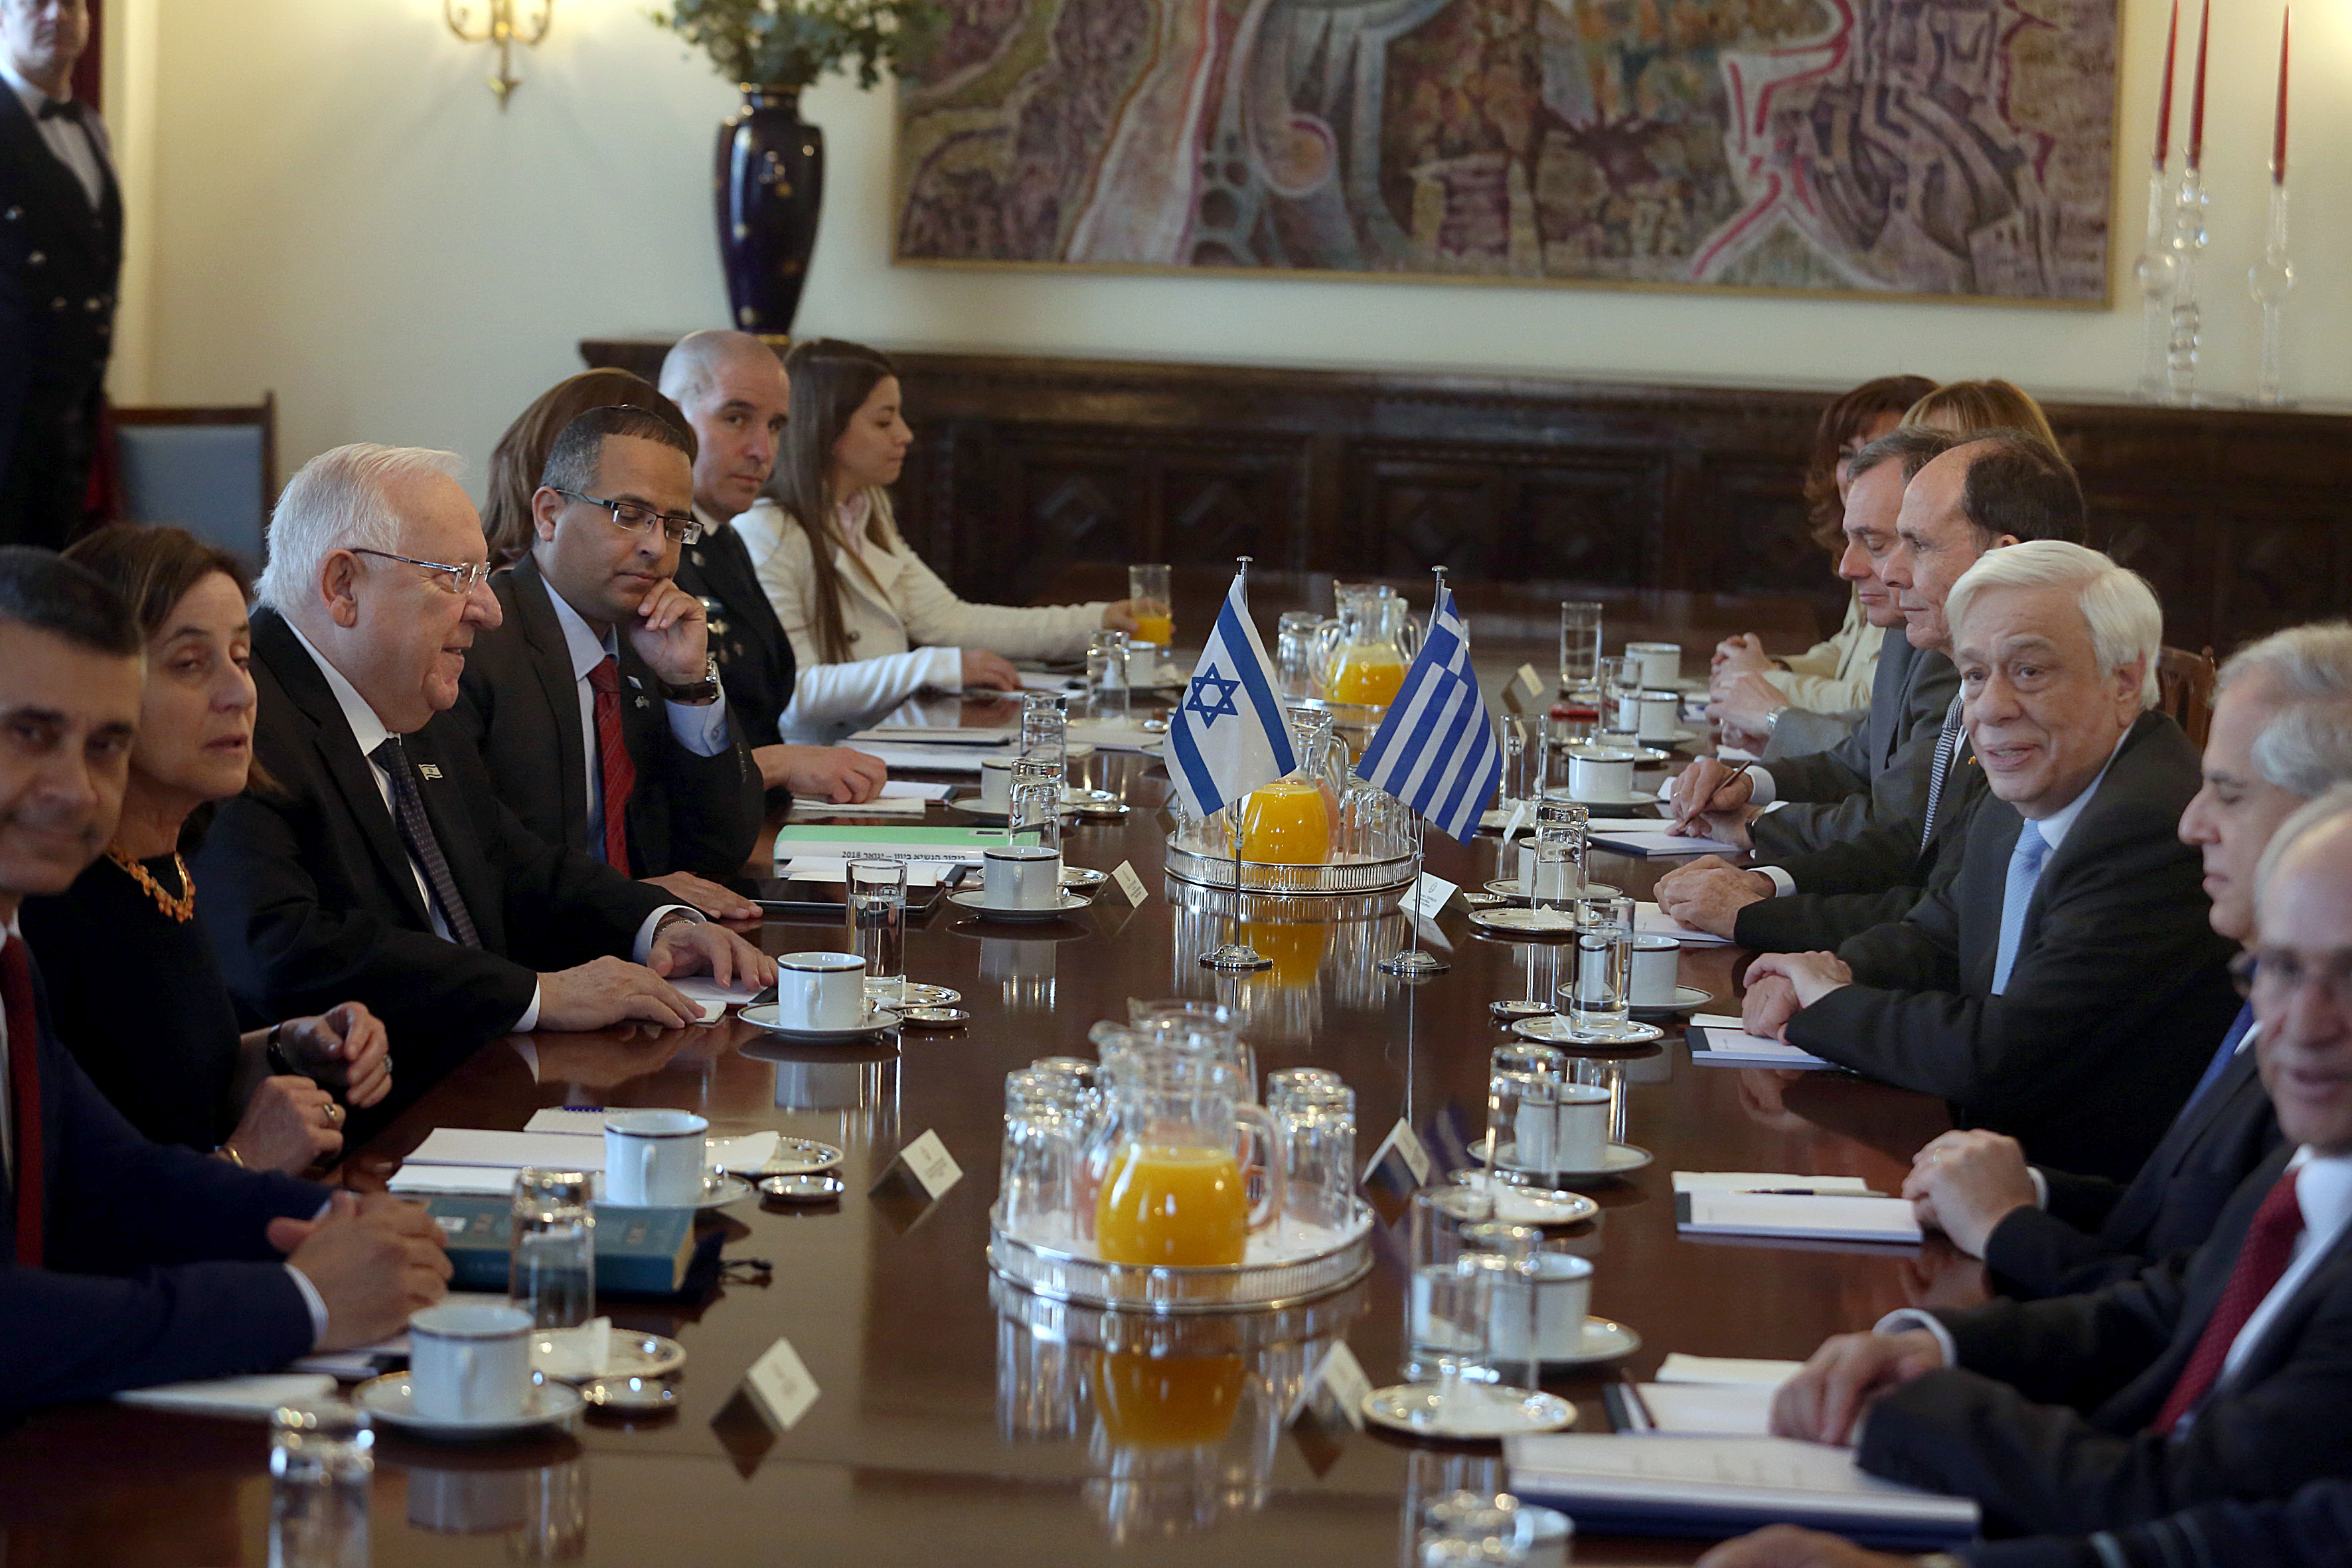 Israeli president’s visit confirms strategic partnership in Greece